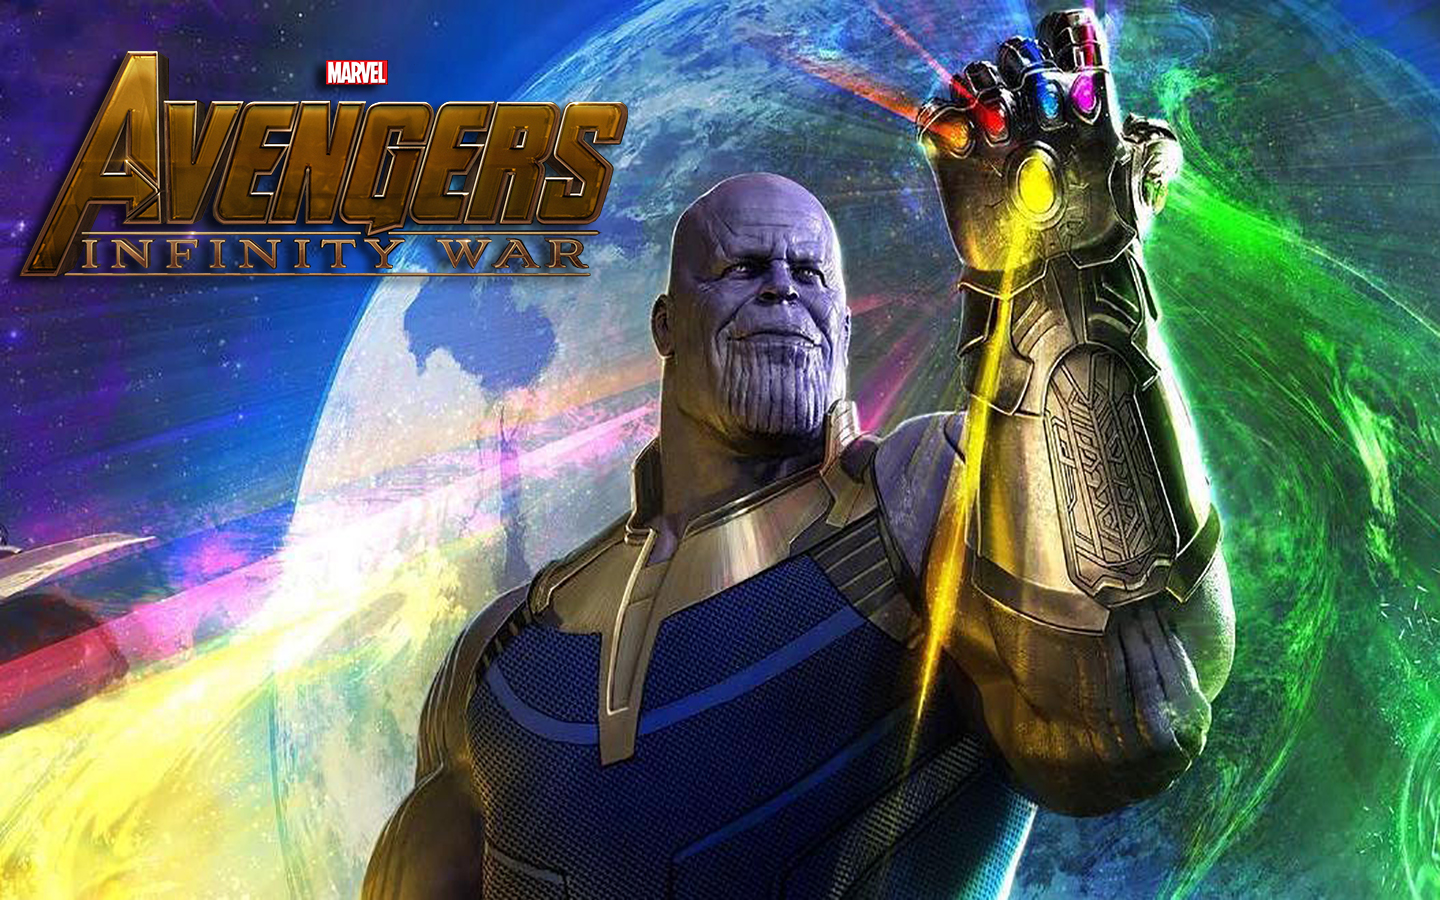 Josh Brolin Describes ‘Avengers: Infinity War’ As “Mind-Blowing”